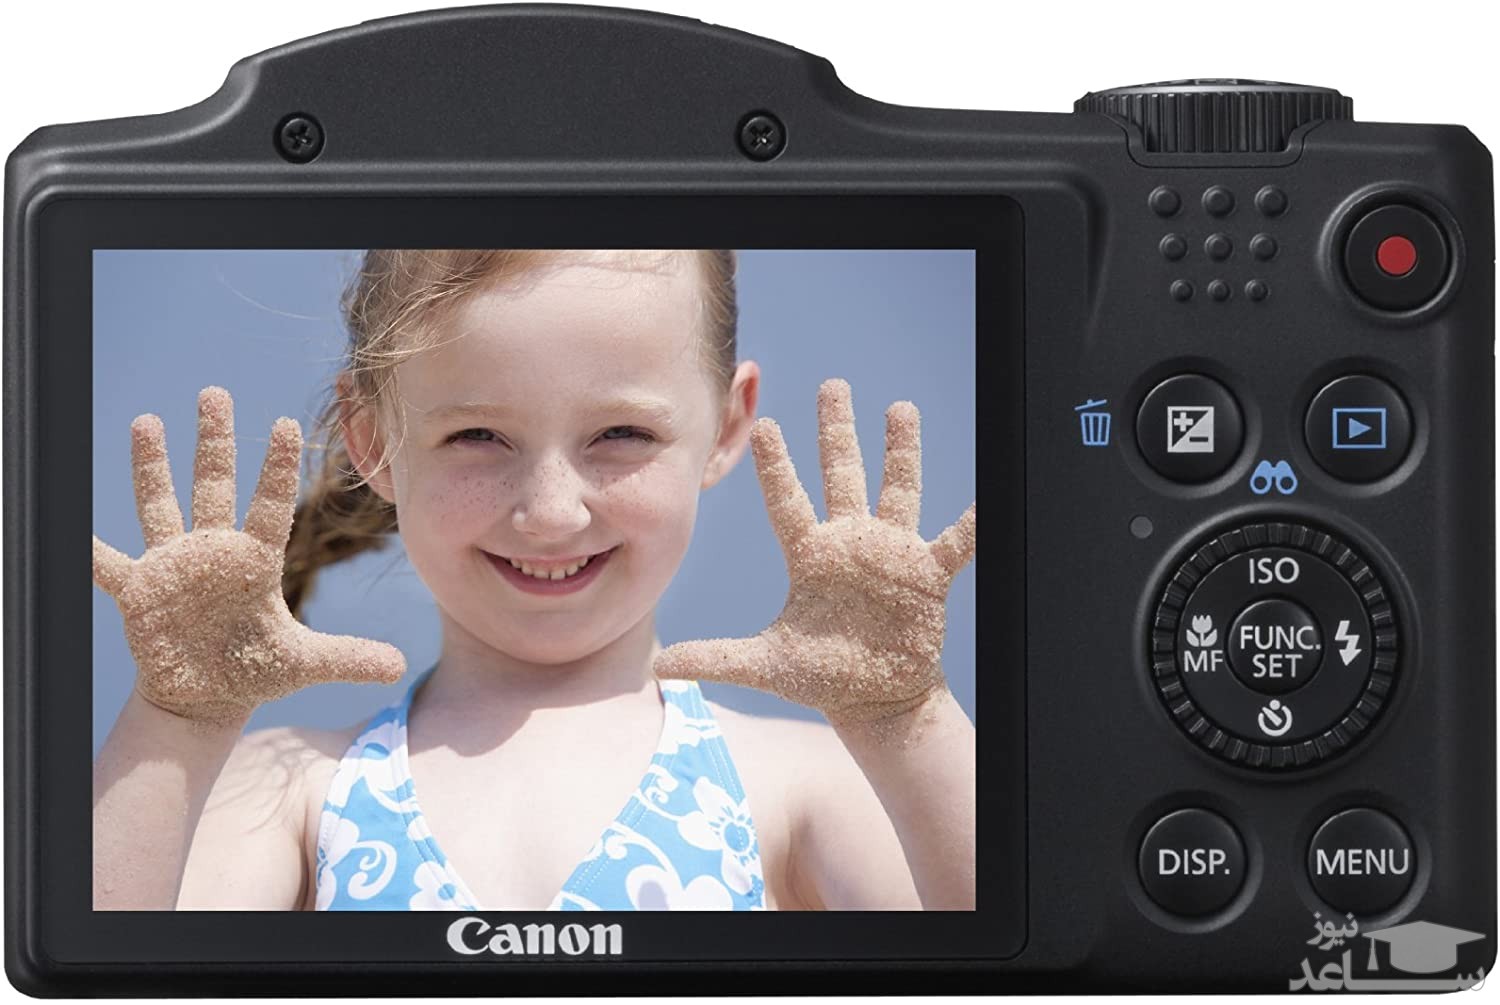 دوربین دیجیتال کانن مدل PowerShot SX500 IS